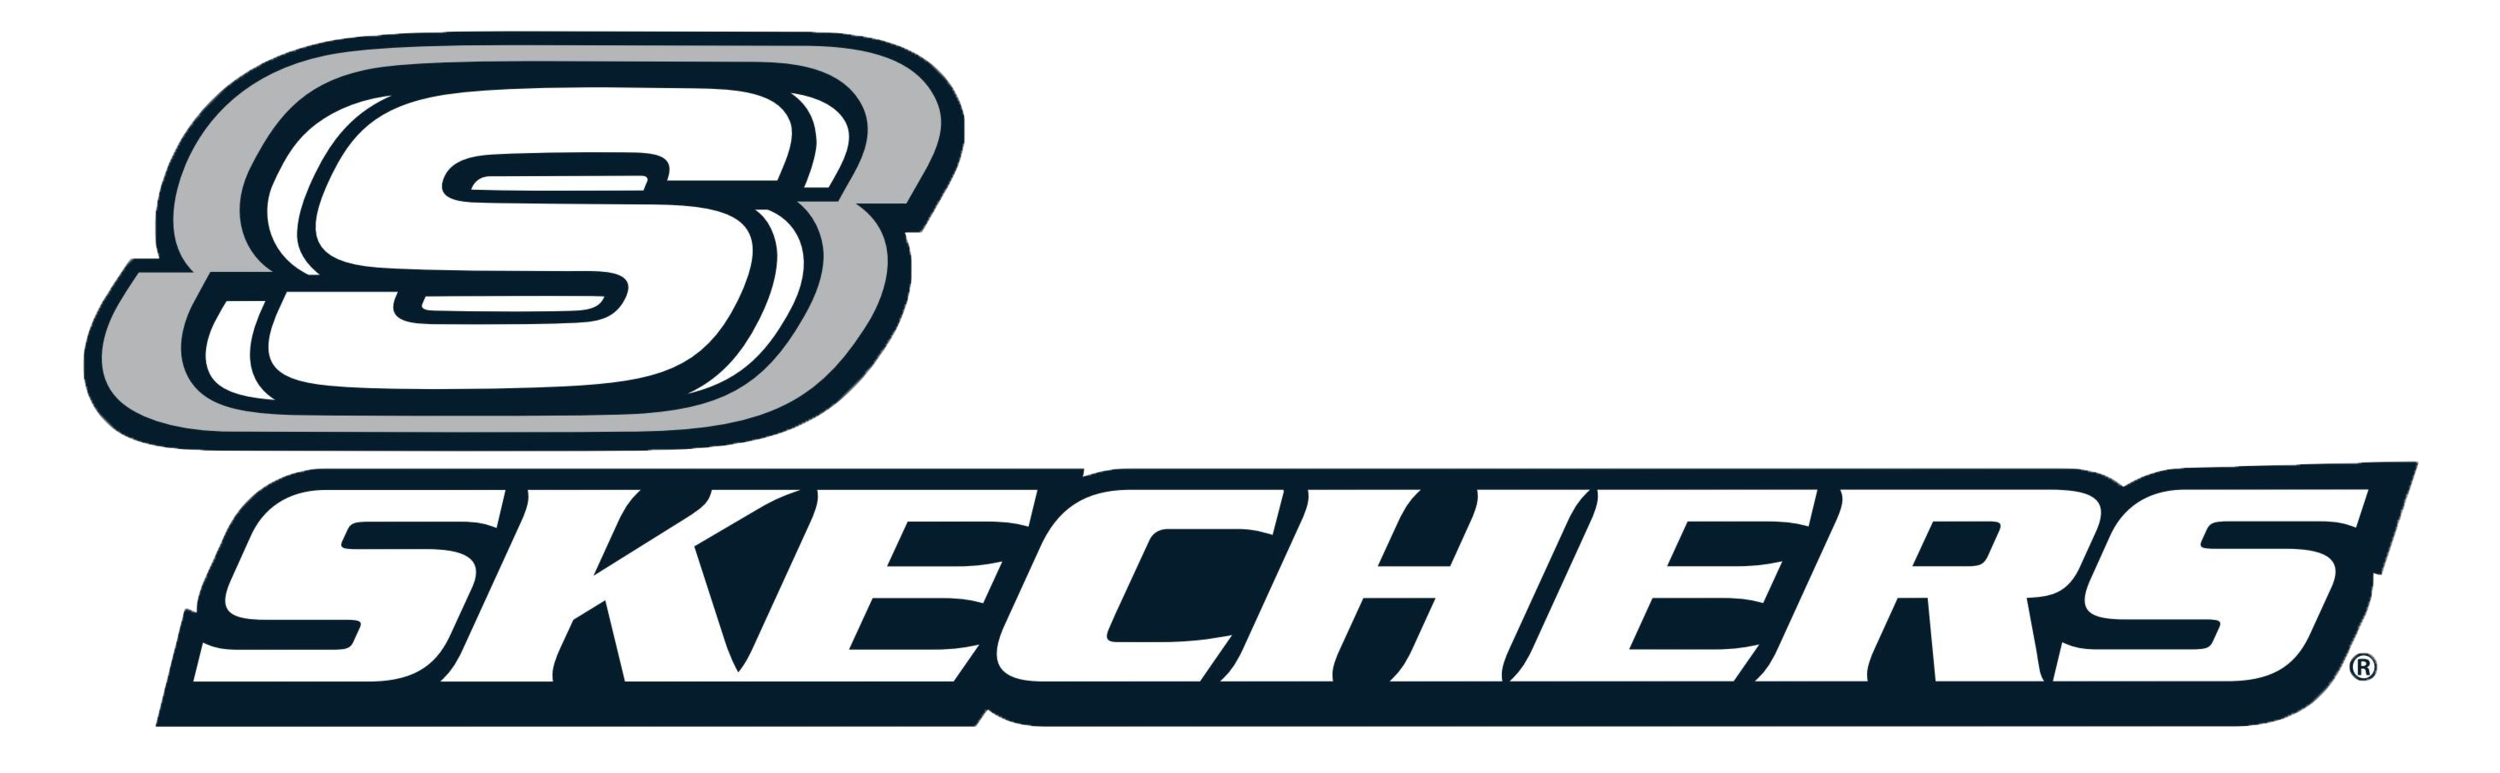 Skechers-Logo-copy.png